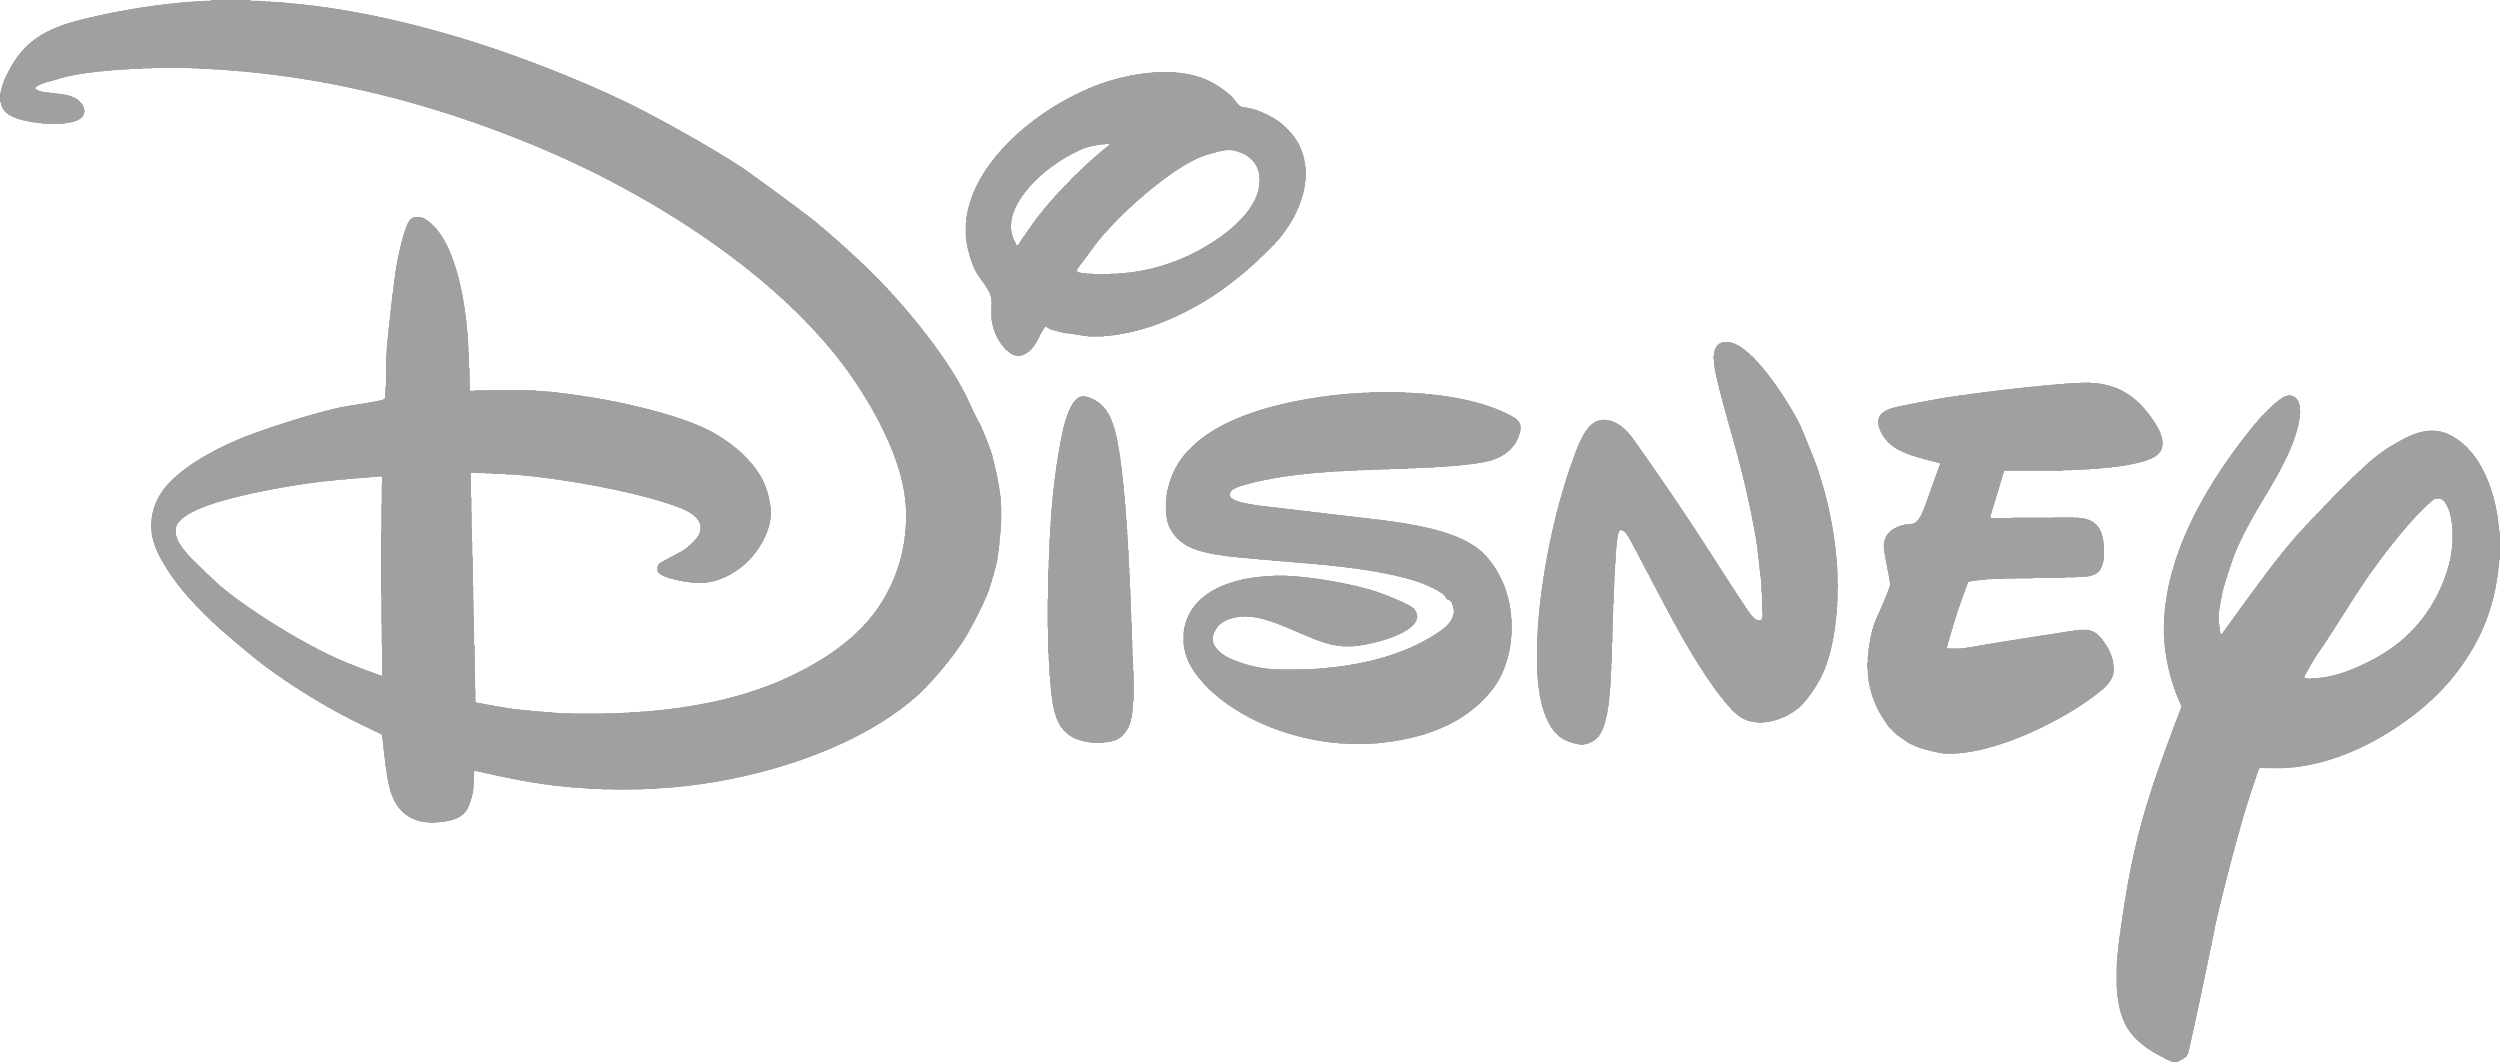 Disney-logo-png-transparent-download.png